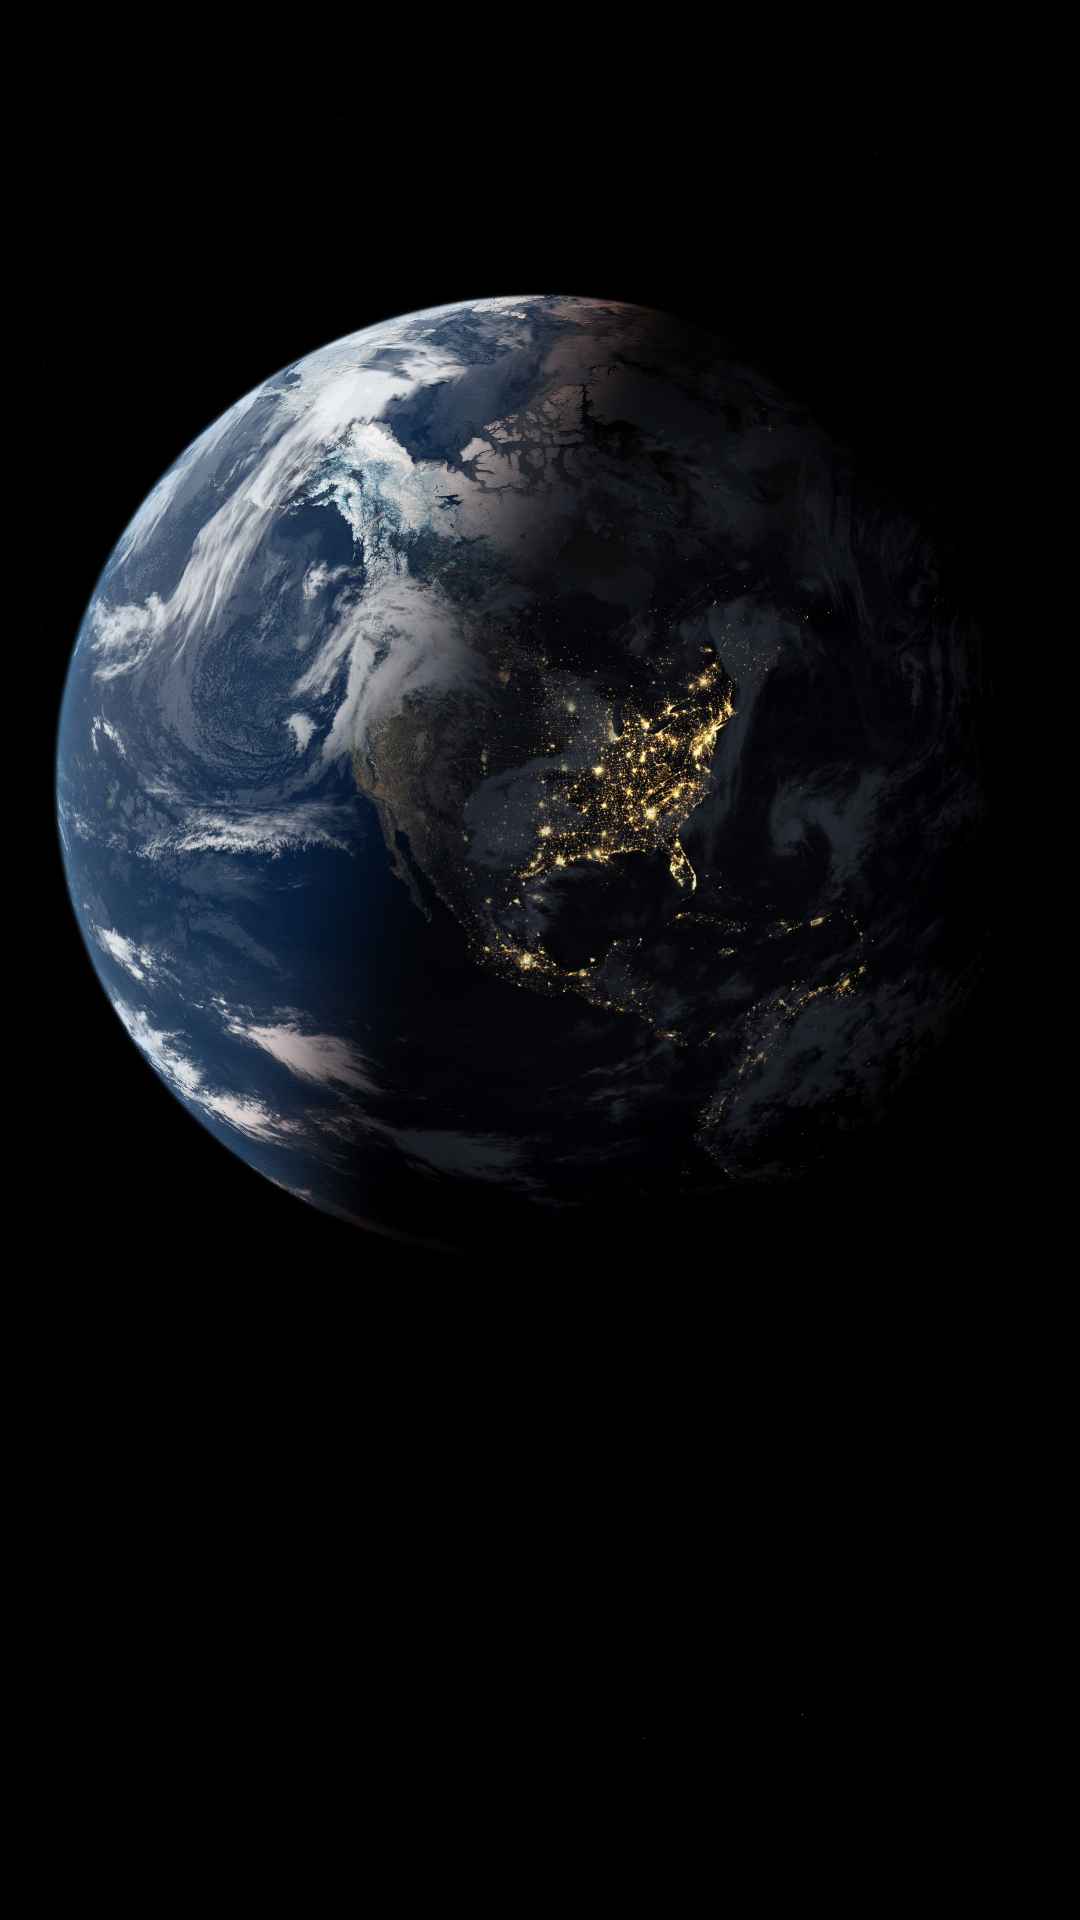 naturaleza fondo de pantalla hd para móvil,planeta,tierra,objeto astronómico,atmósfera,espacio exterior